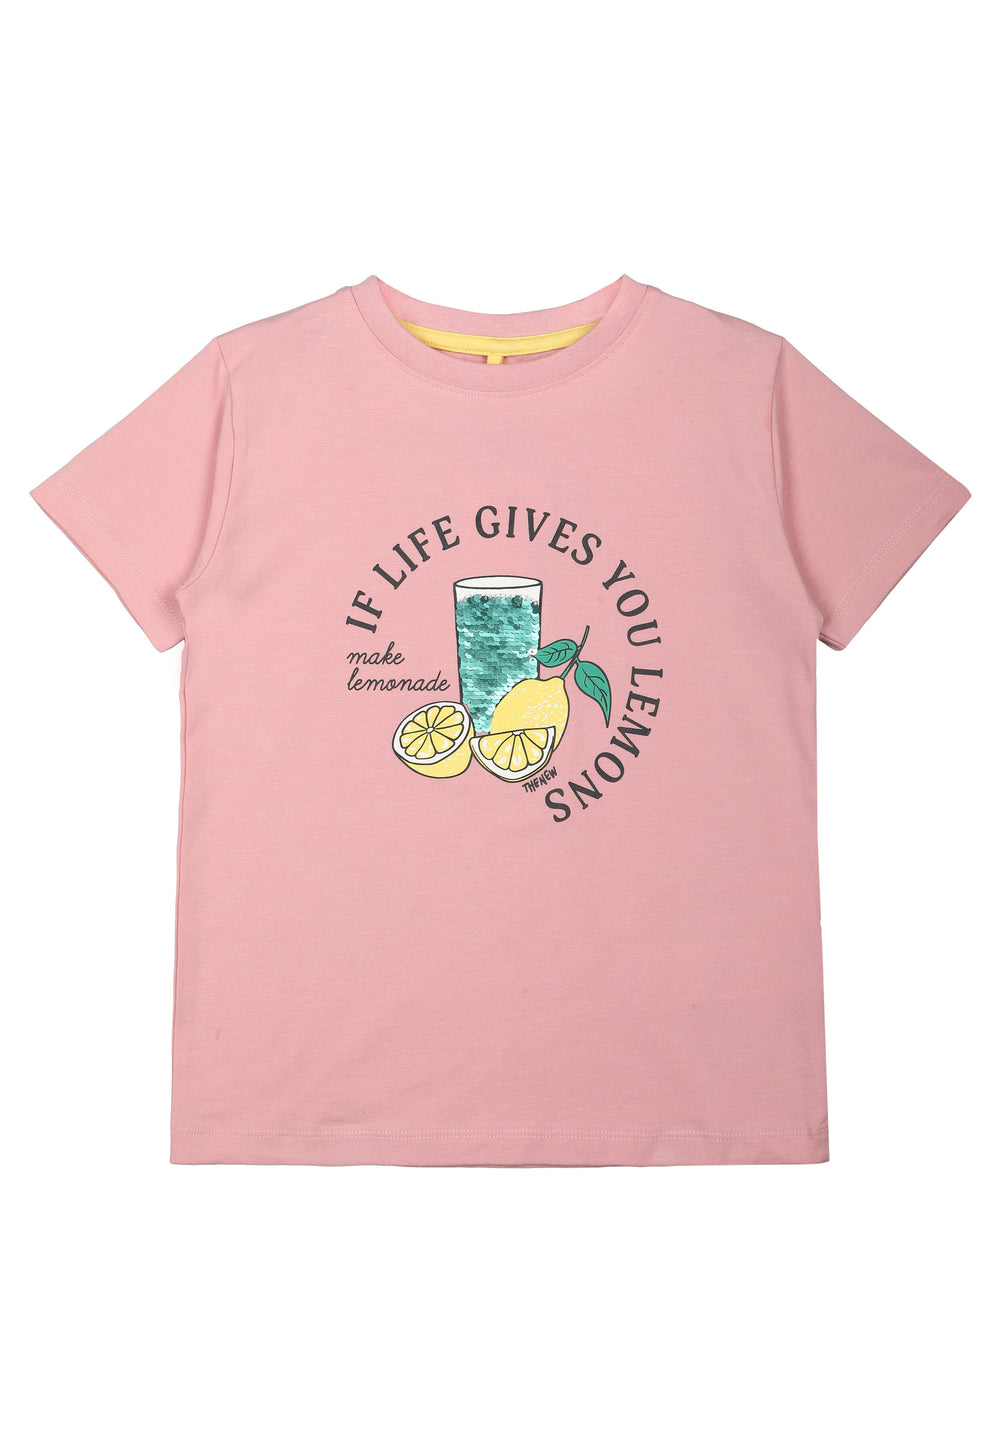 The New - Tnkamilla S_s Tee - Pink Nectar T-shirts 